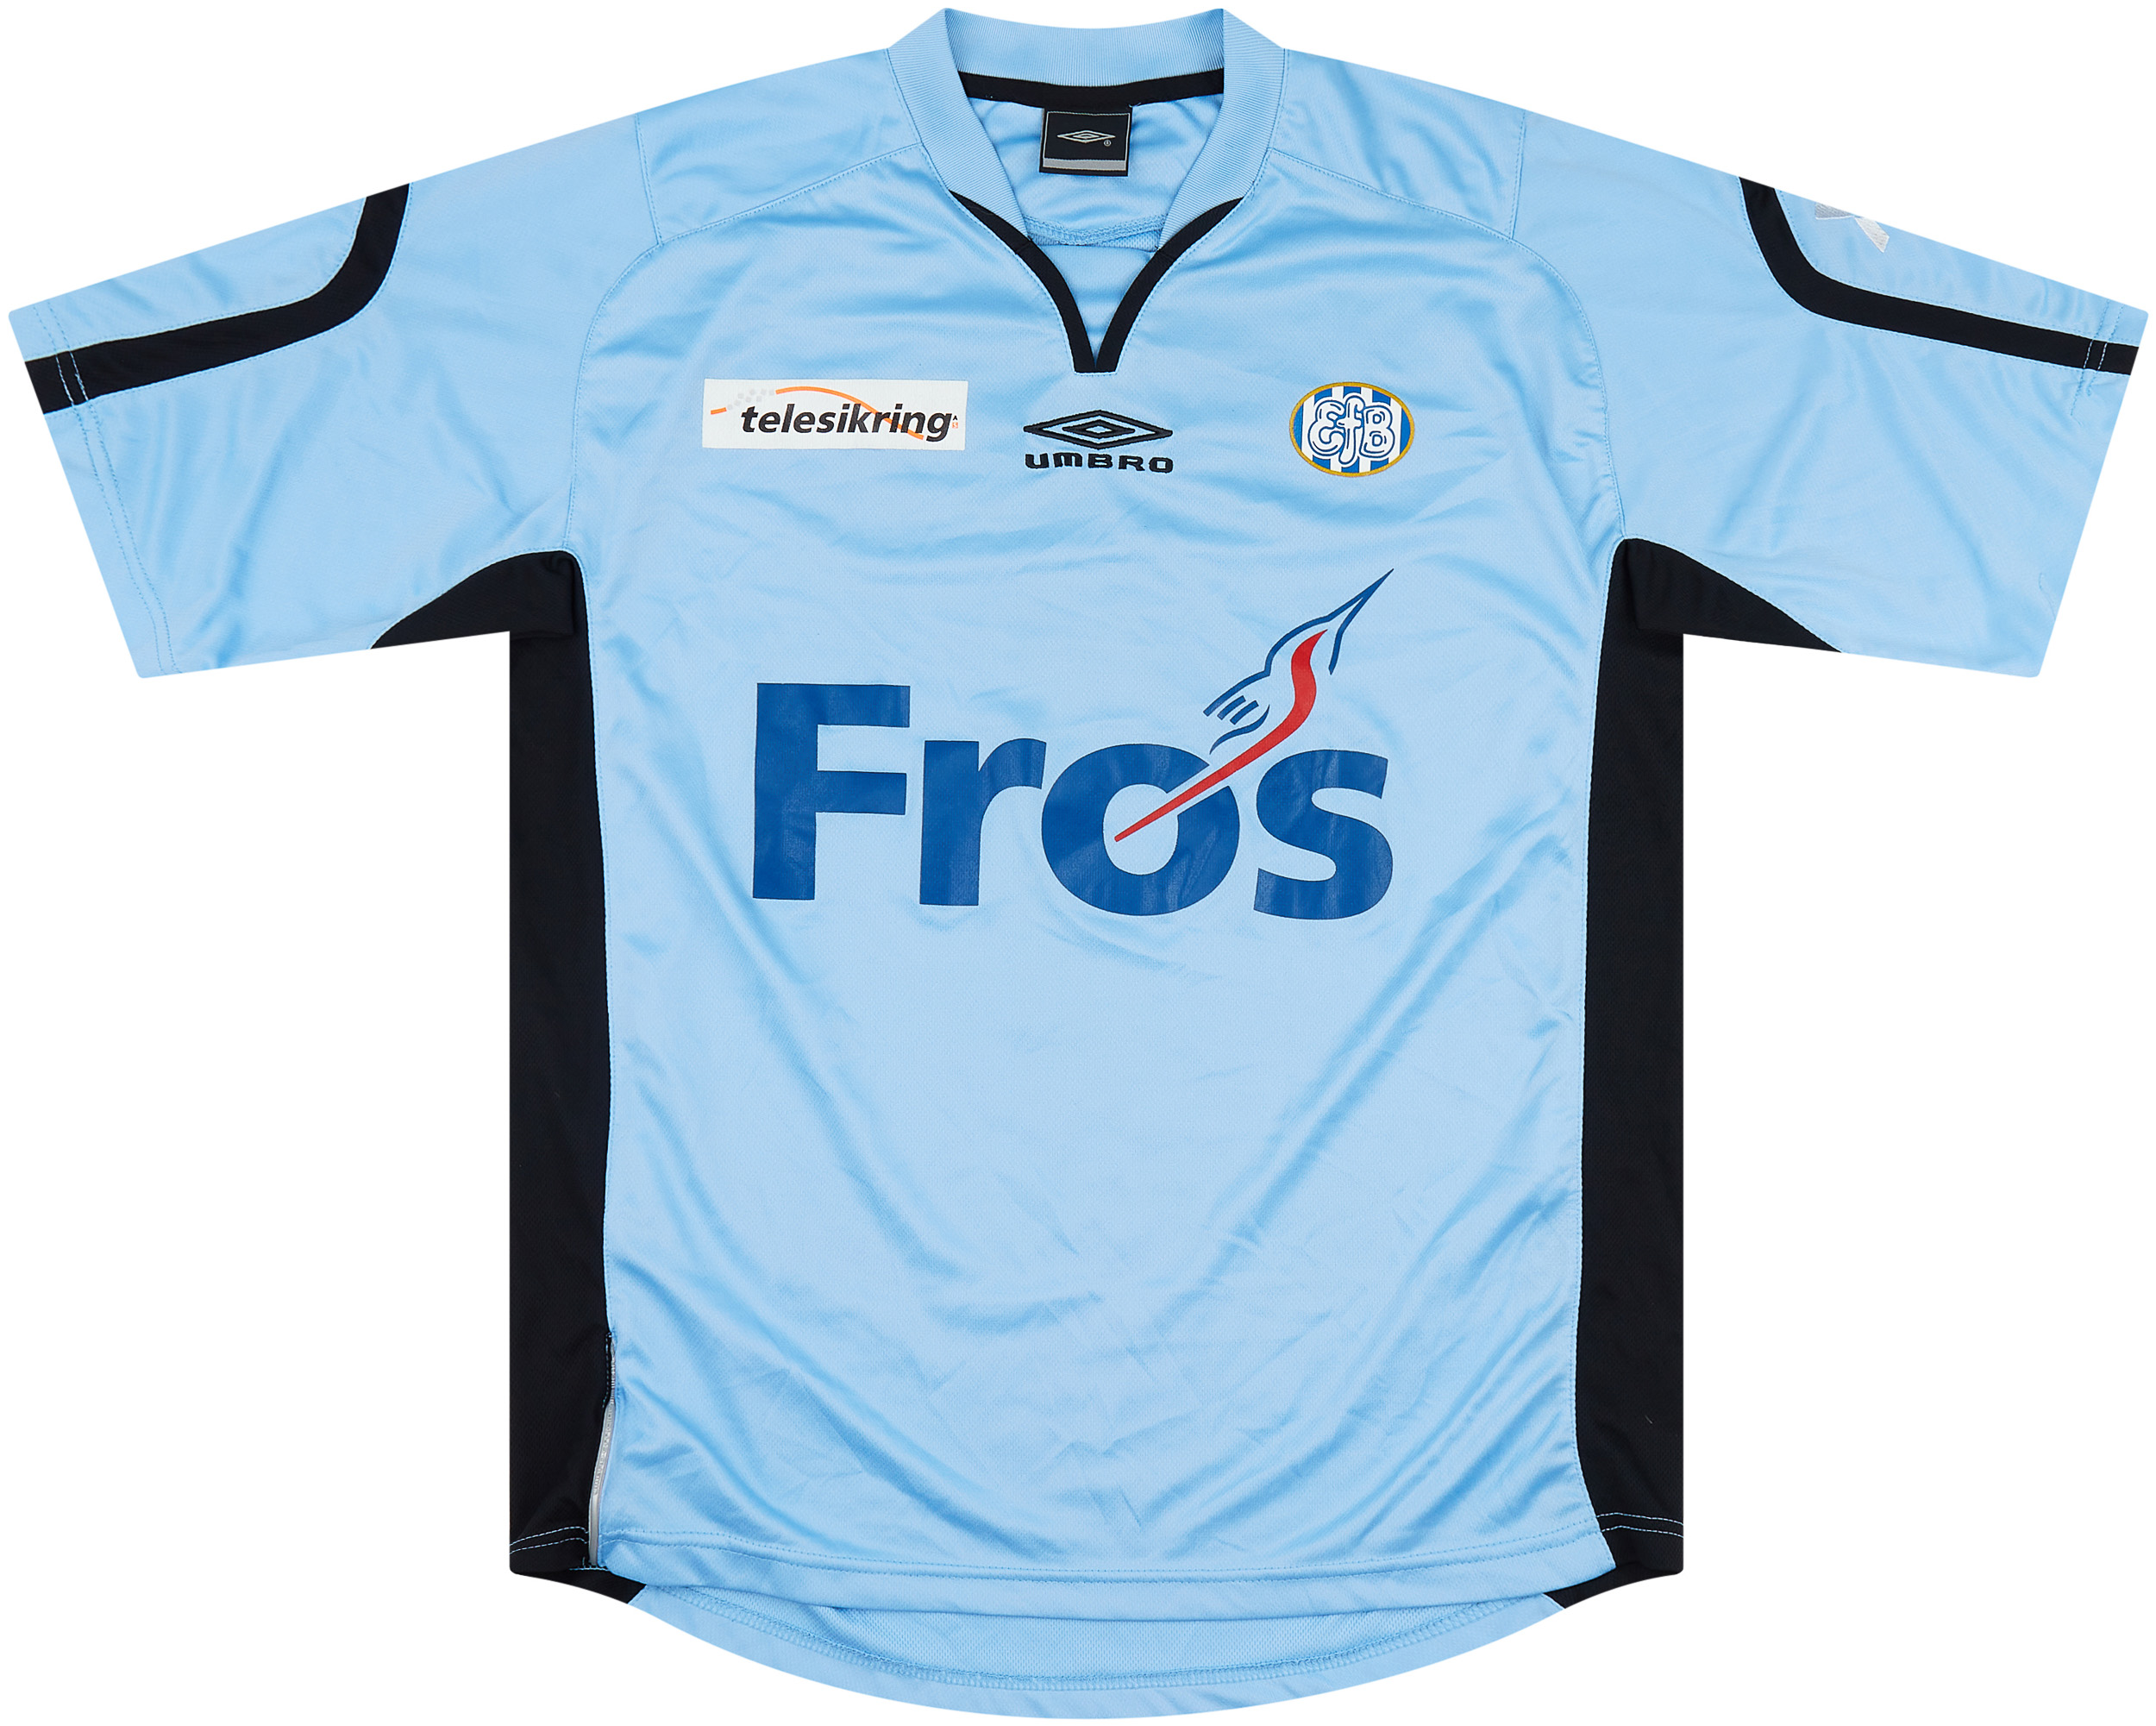 Esbjerg  Goalkeeper shirt (Original)